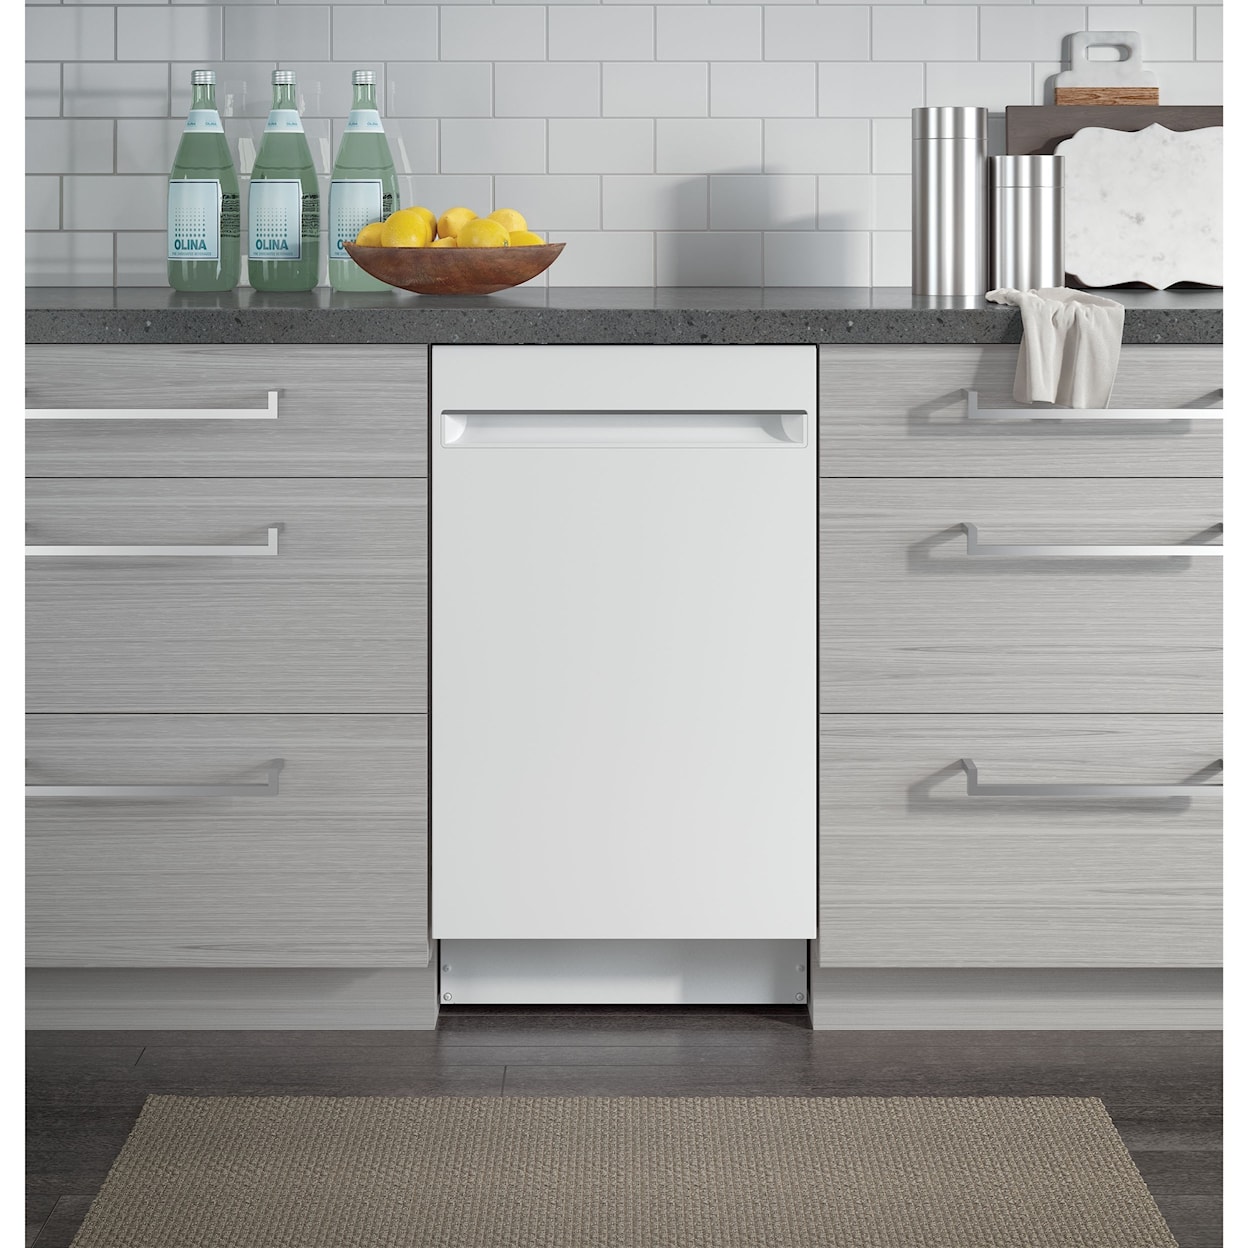 GE Appliances GE Profile Dishwashers GE Profile™ 18" Built-In Dishwasher